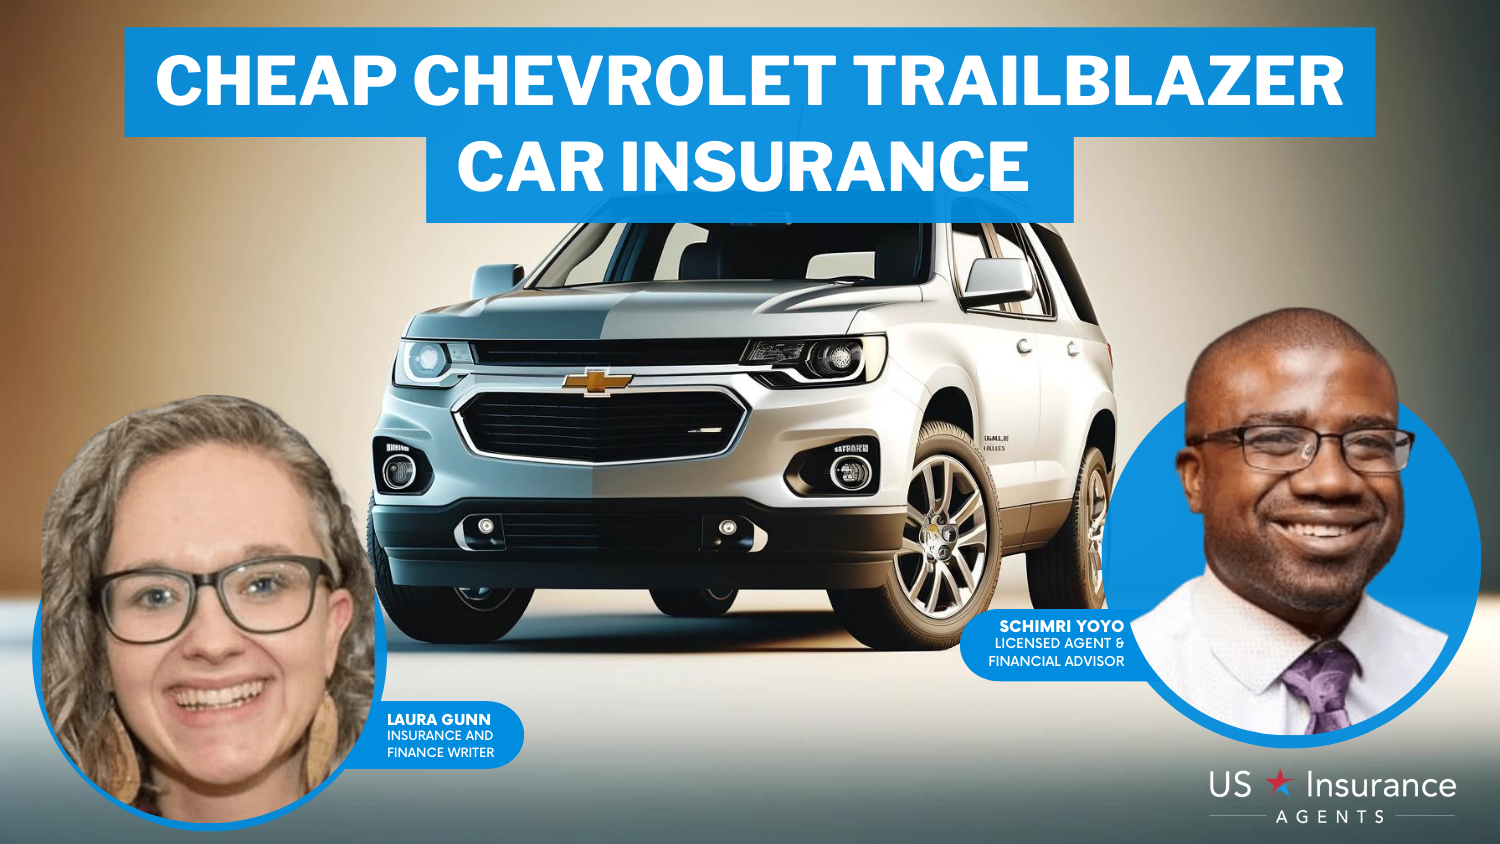 AAA, Auto-Owners, and Progressive: Cheap Chevrolet Trailblazer Car Insurance